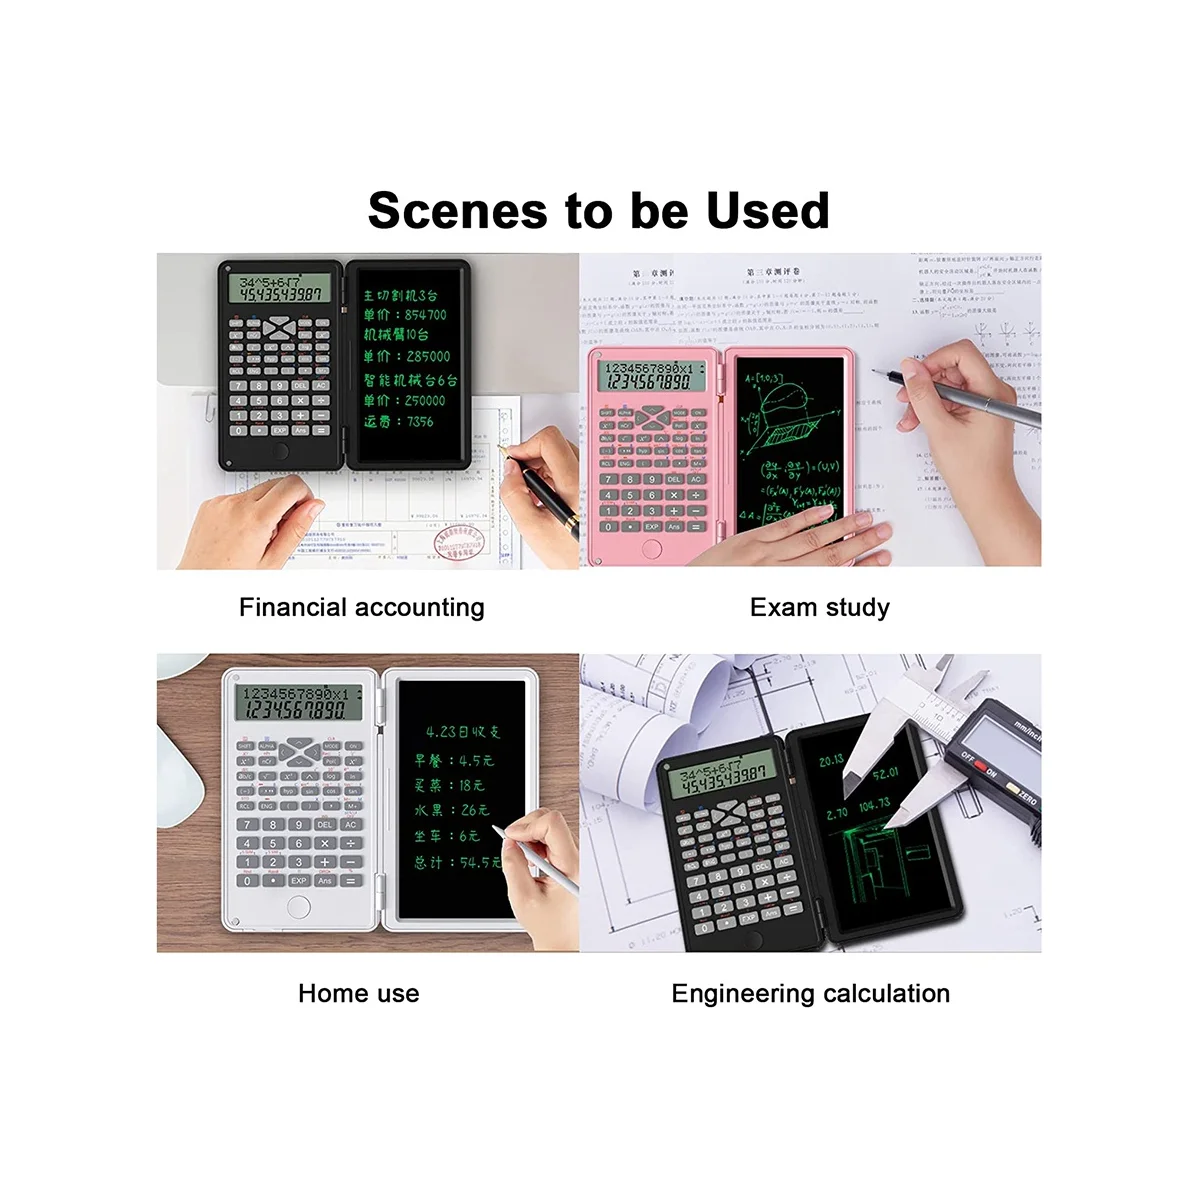 

Scientific Calculators, 12-Digit LCD Display Pocket Office Desktop Calculator for Home School Meeting and Study,Black